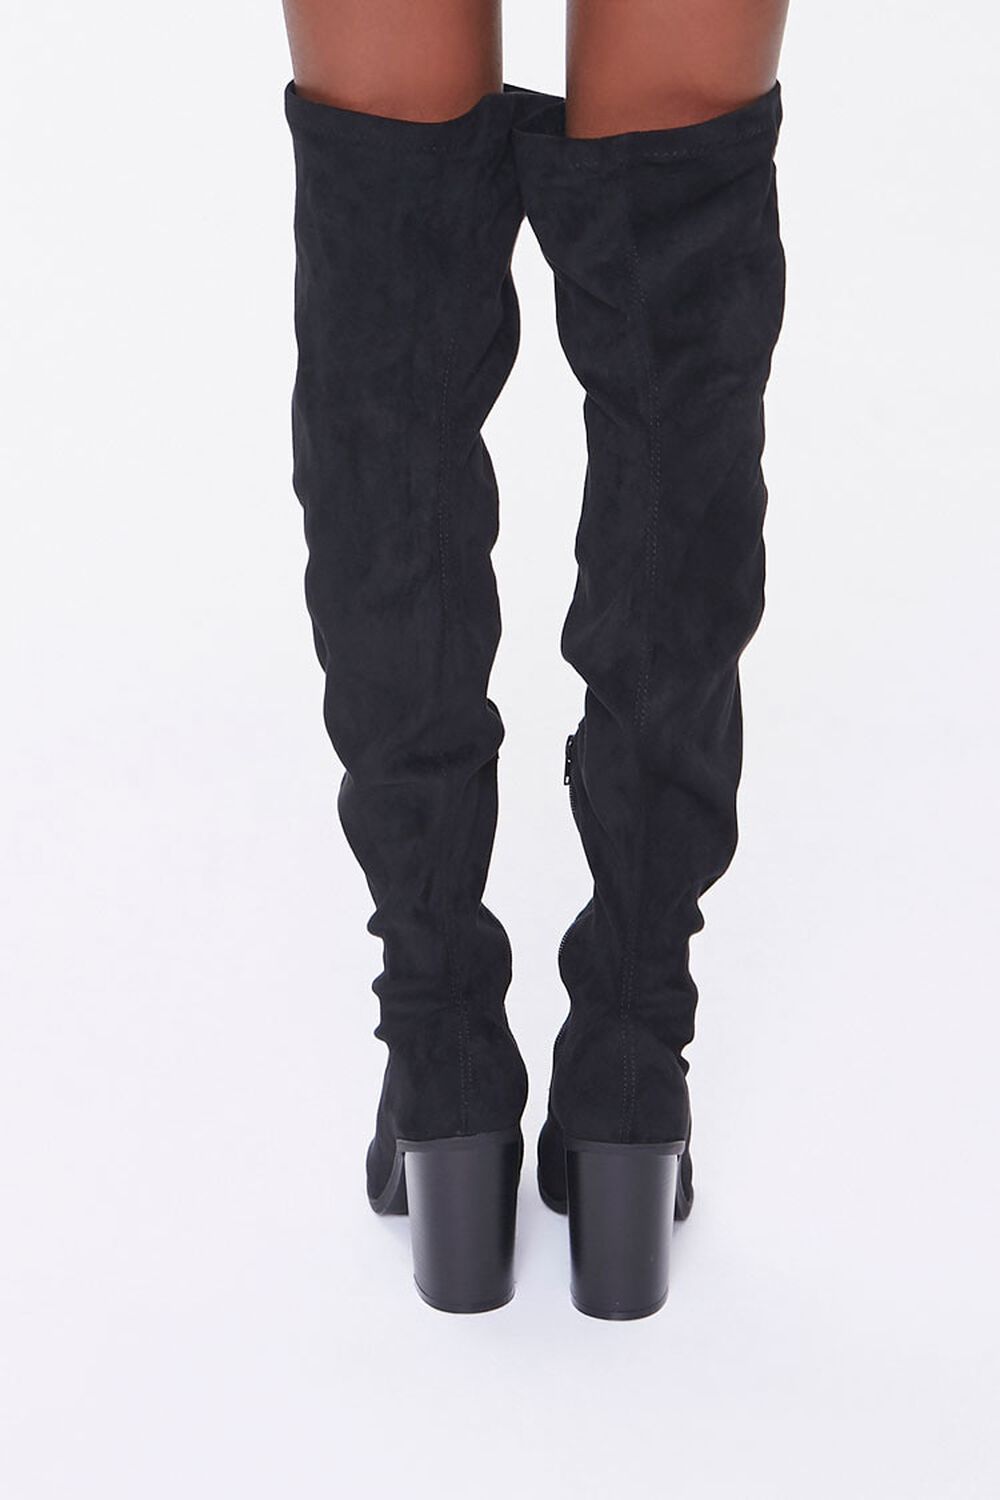 BLACK Faux Suede Block Heel Boots, image 3